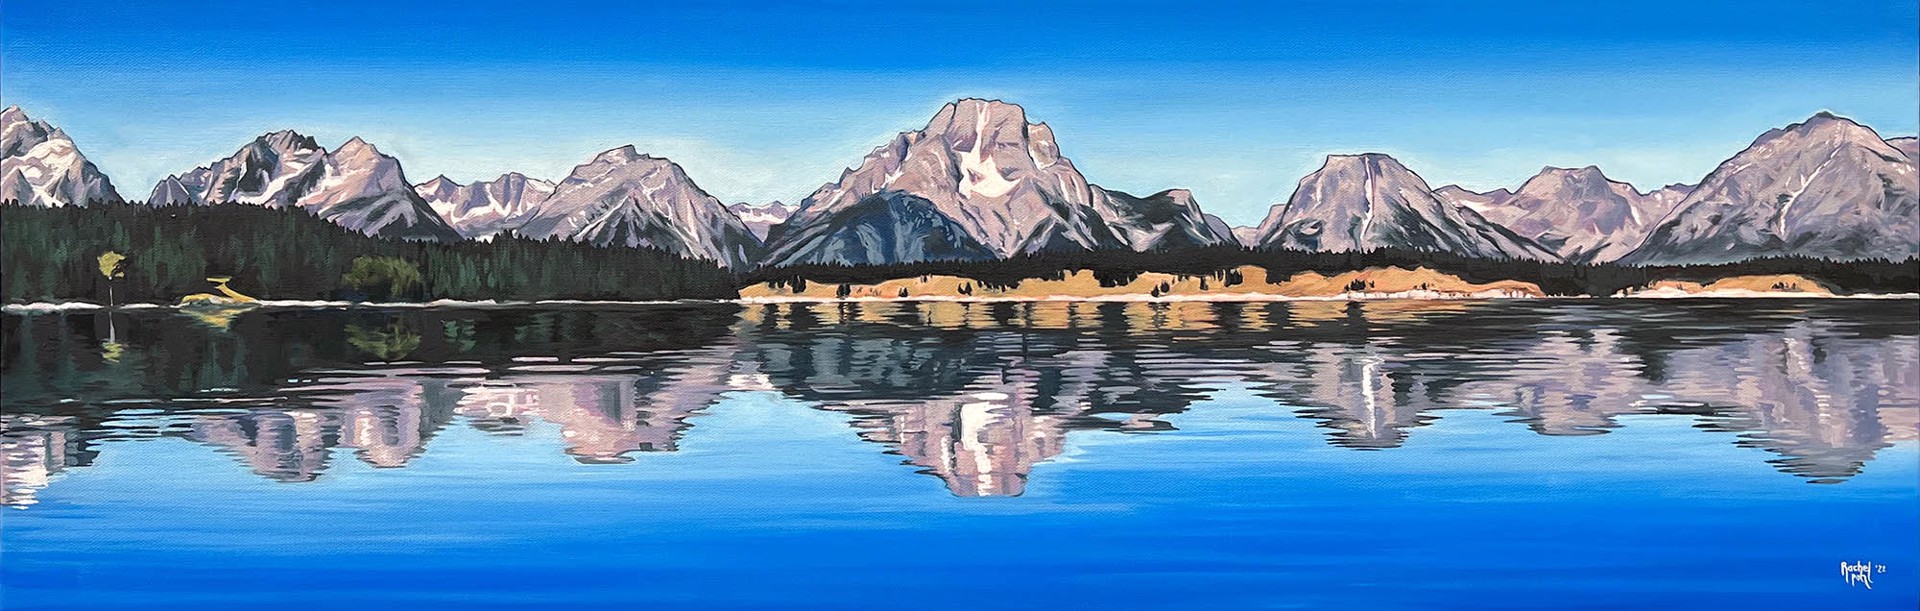 Summer Mountain Landscape Of The Tetons Reflecting In Jackson Lake